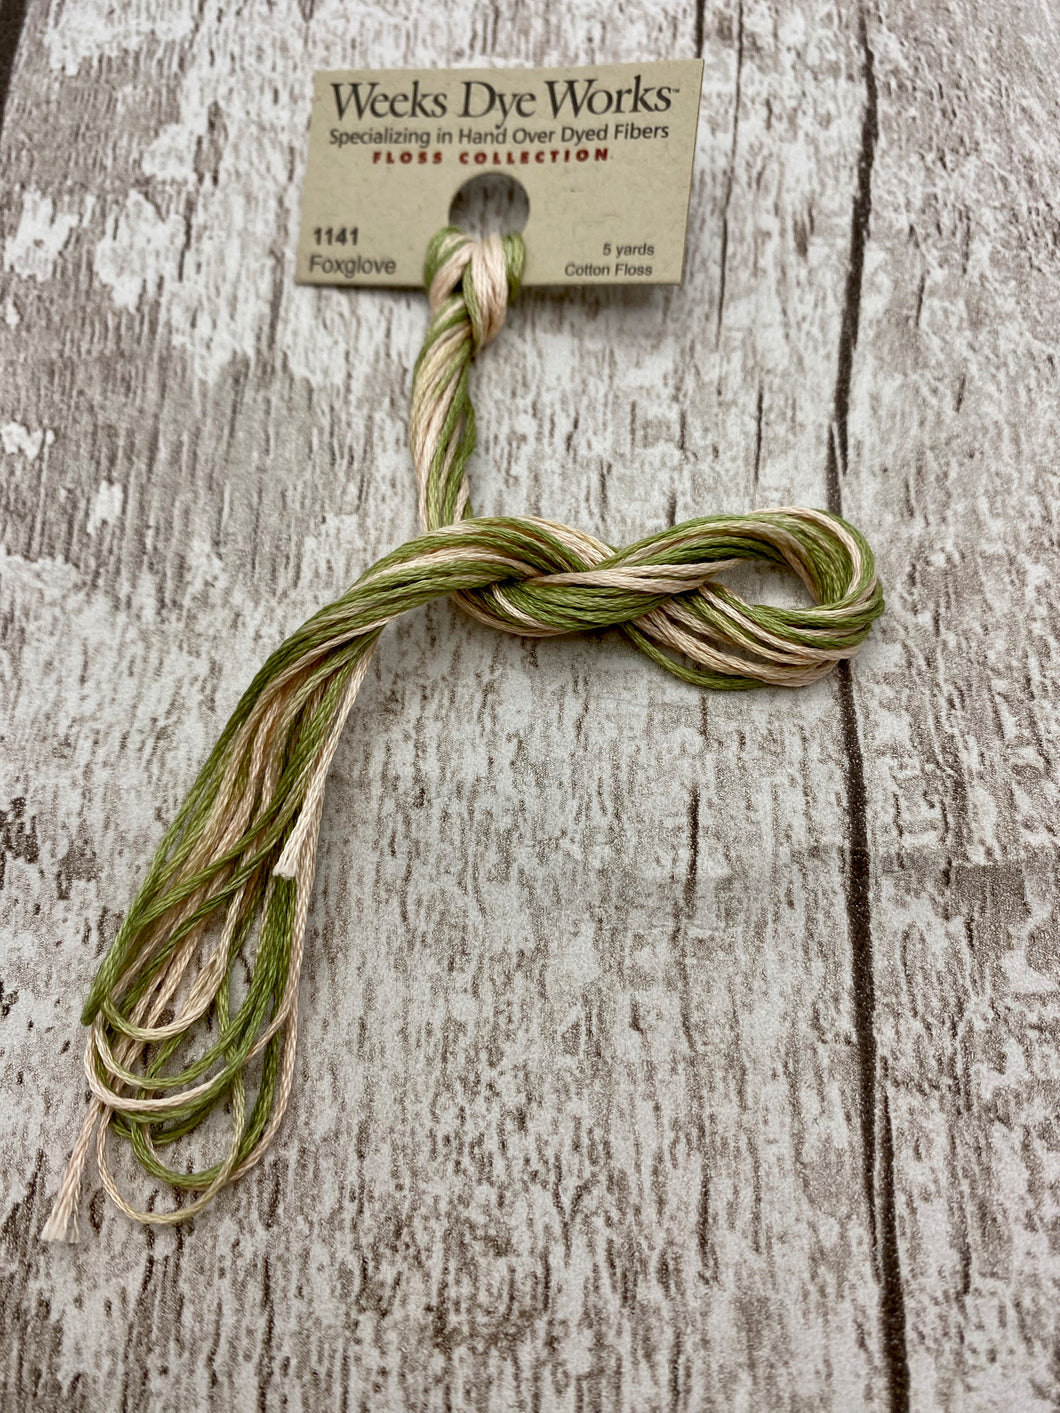 Foxglove (#1141) Weeks Dye Works, 6-strand cotton floss